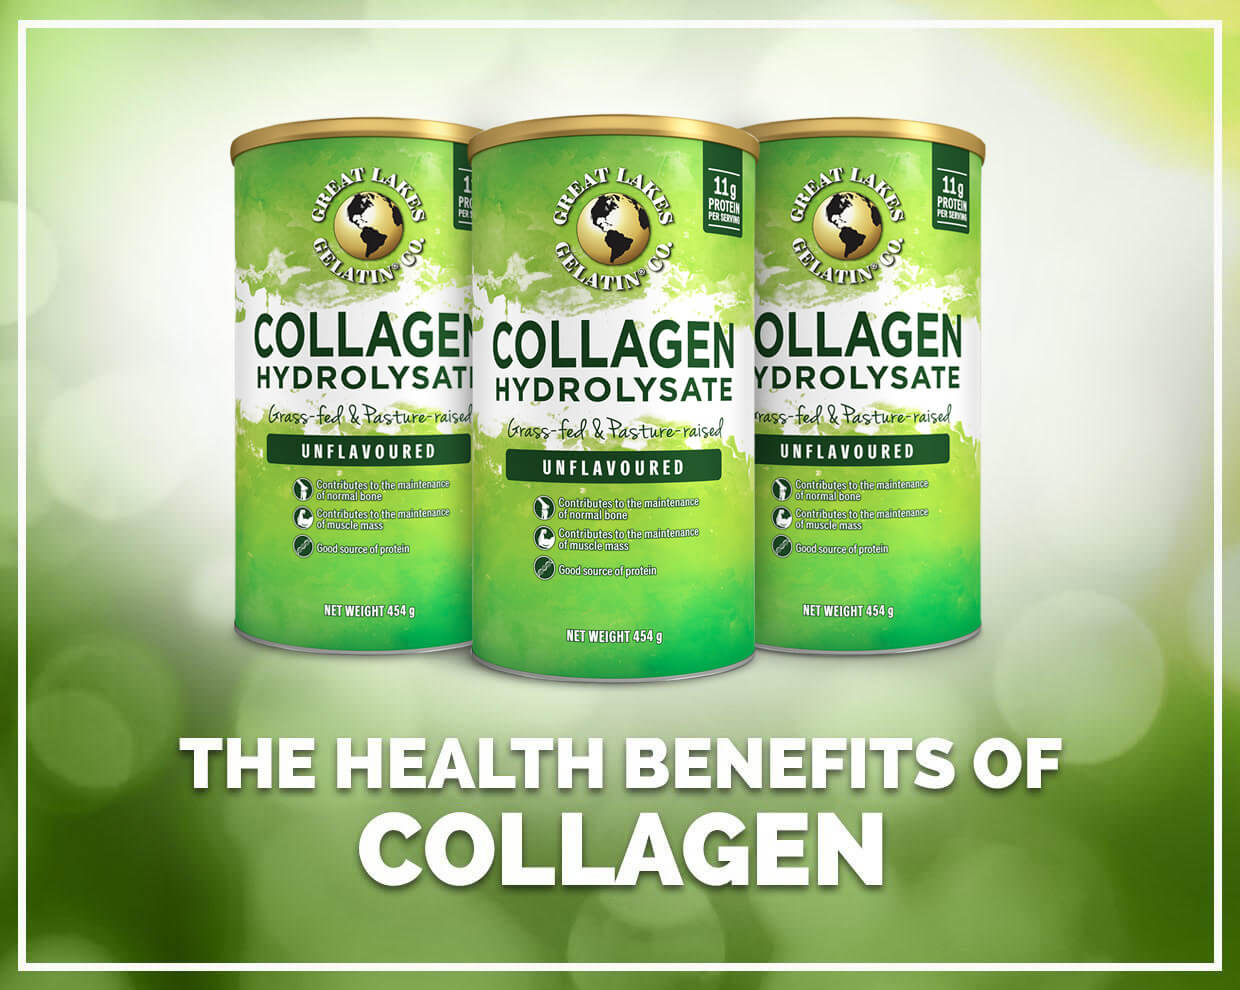 The health benefits of collagen